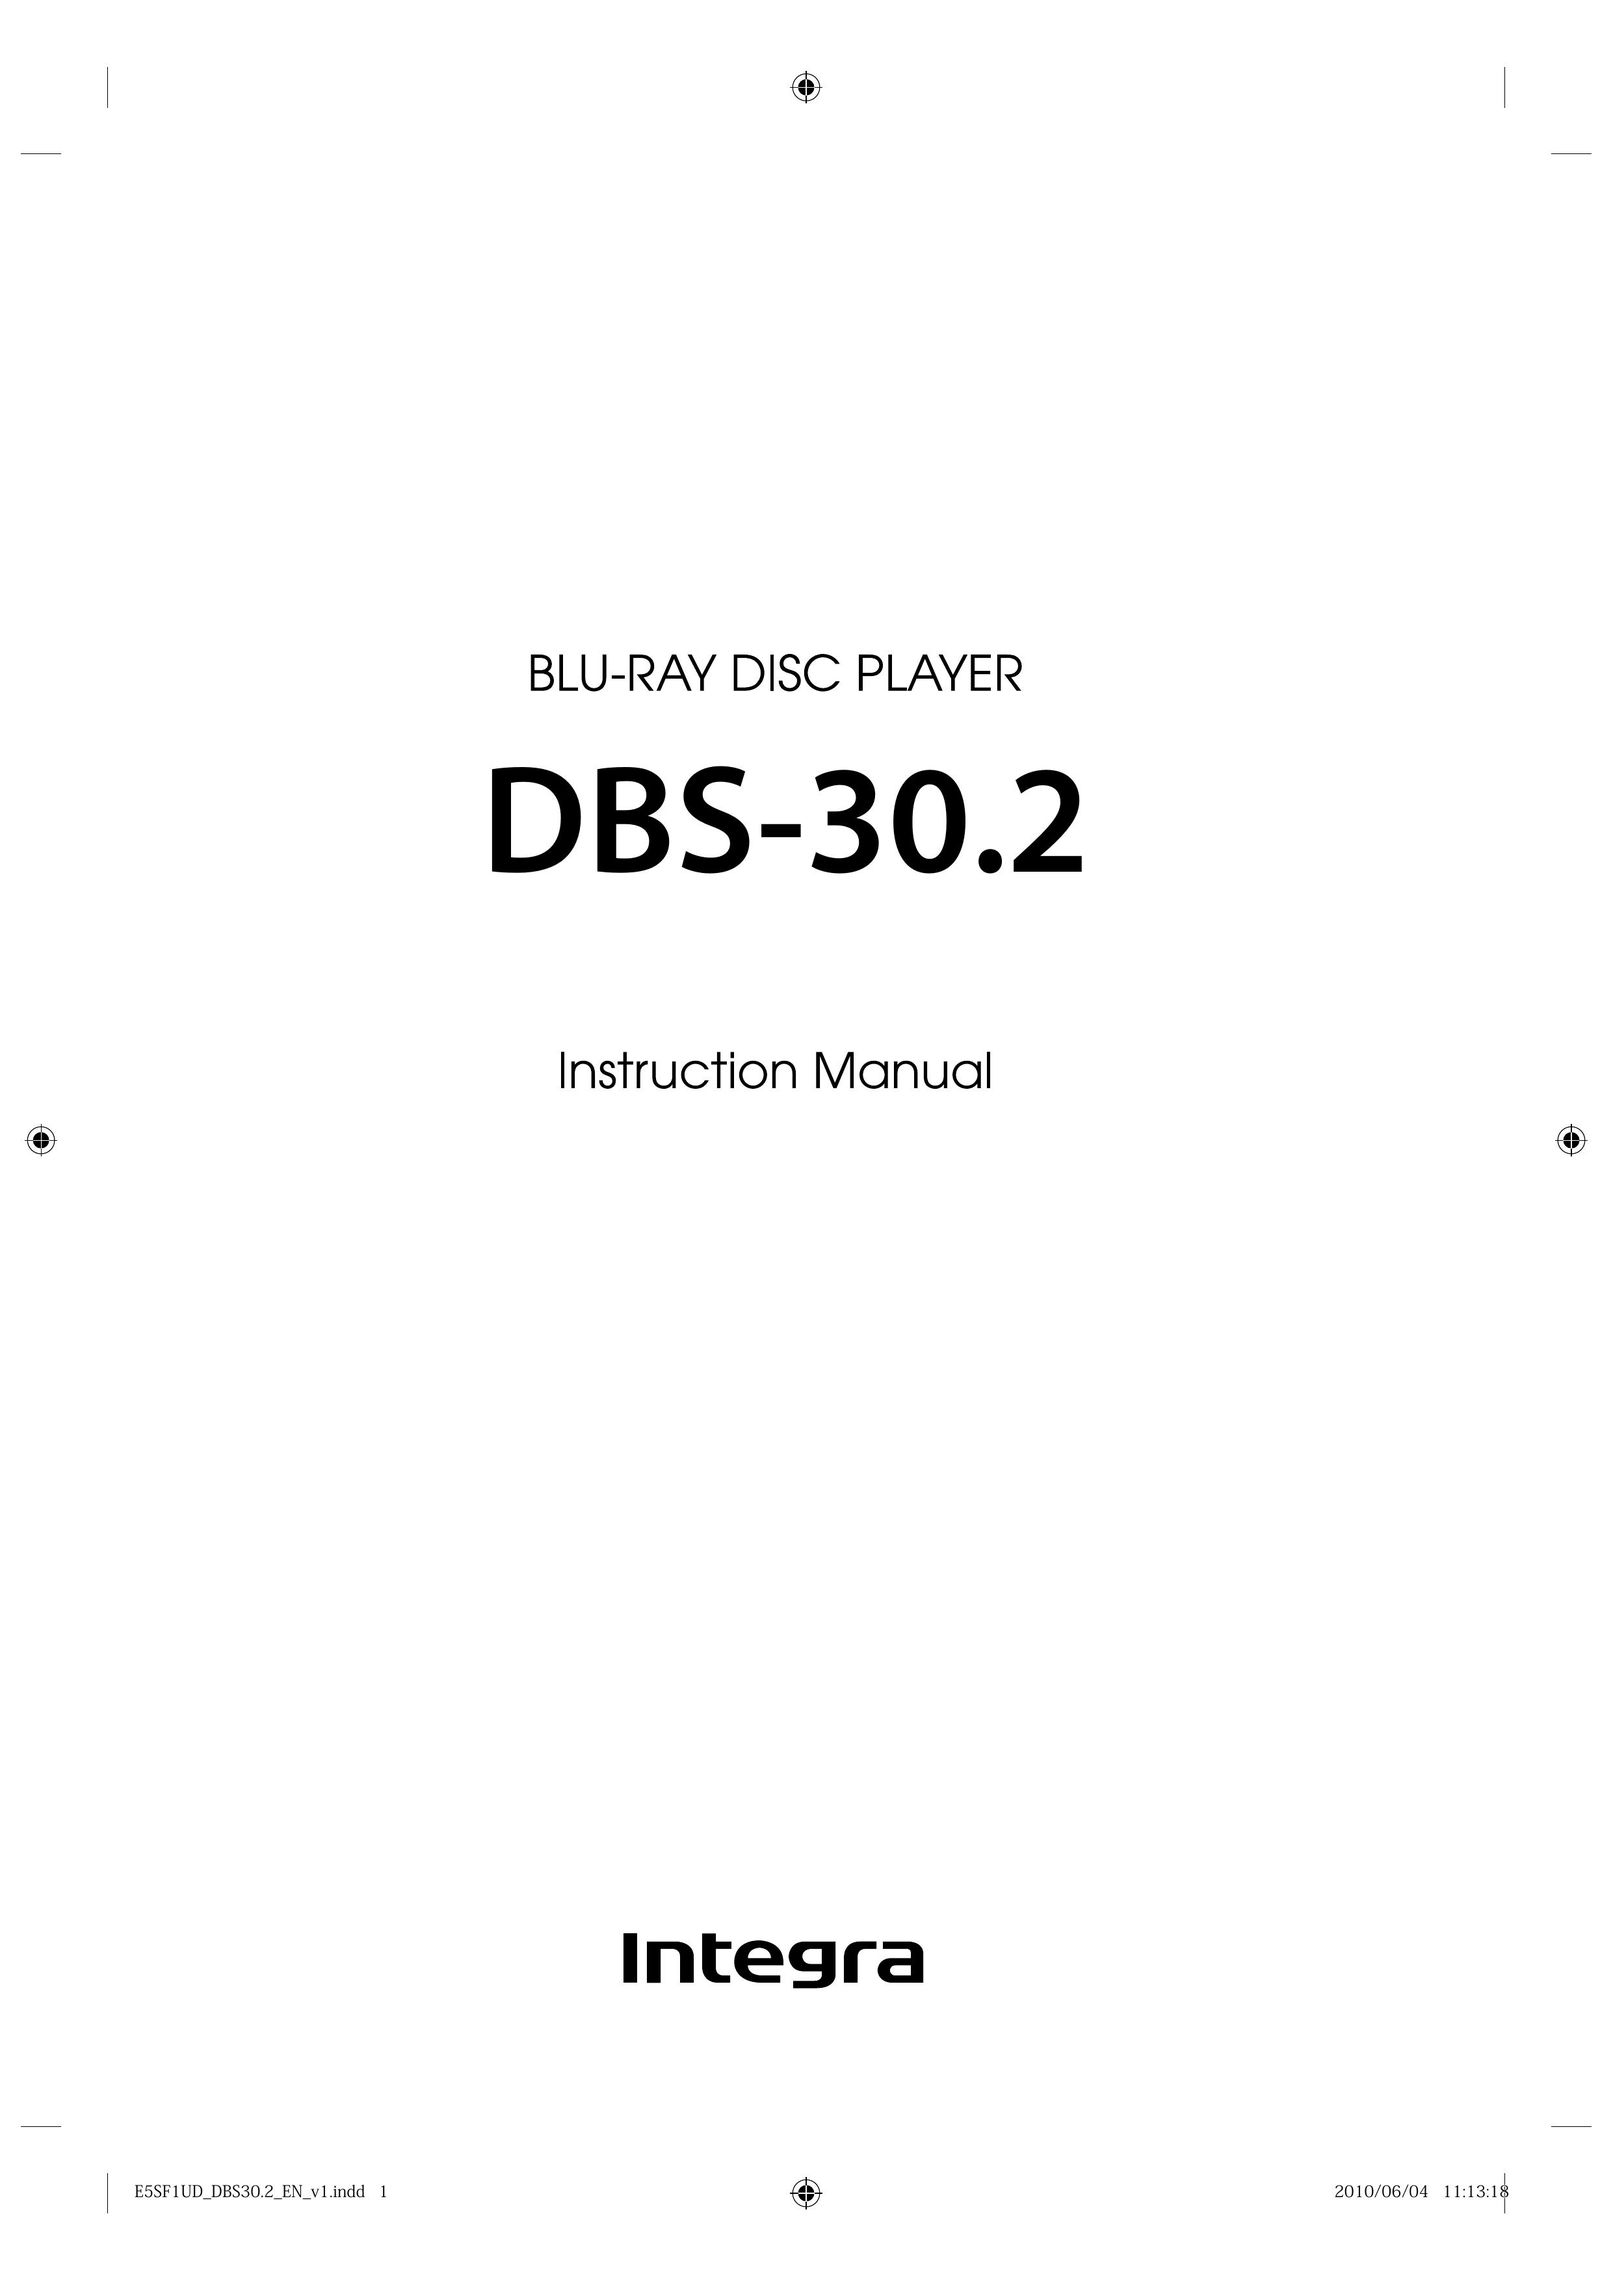 Integra DBS-30.2 Blu-ray Player User Manual